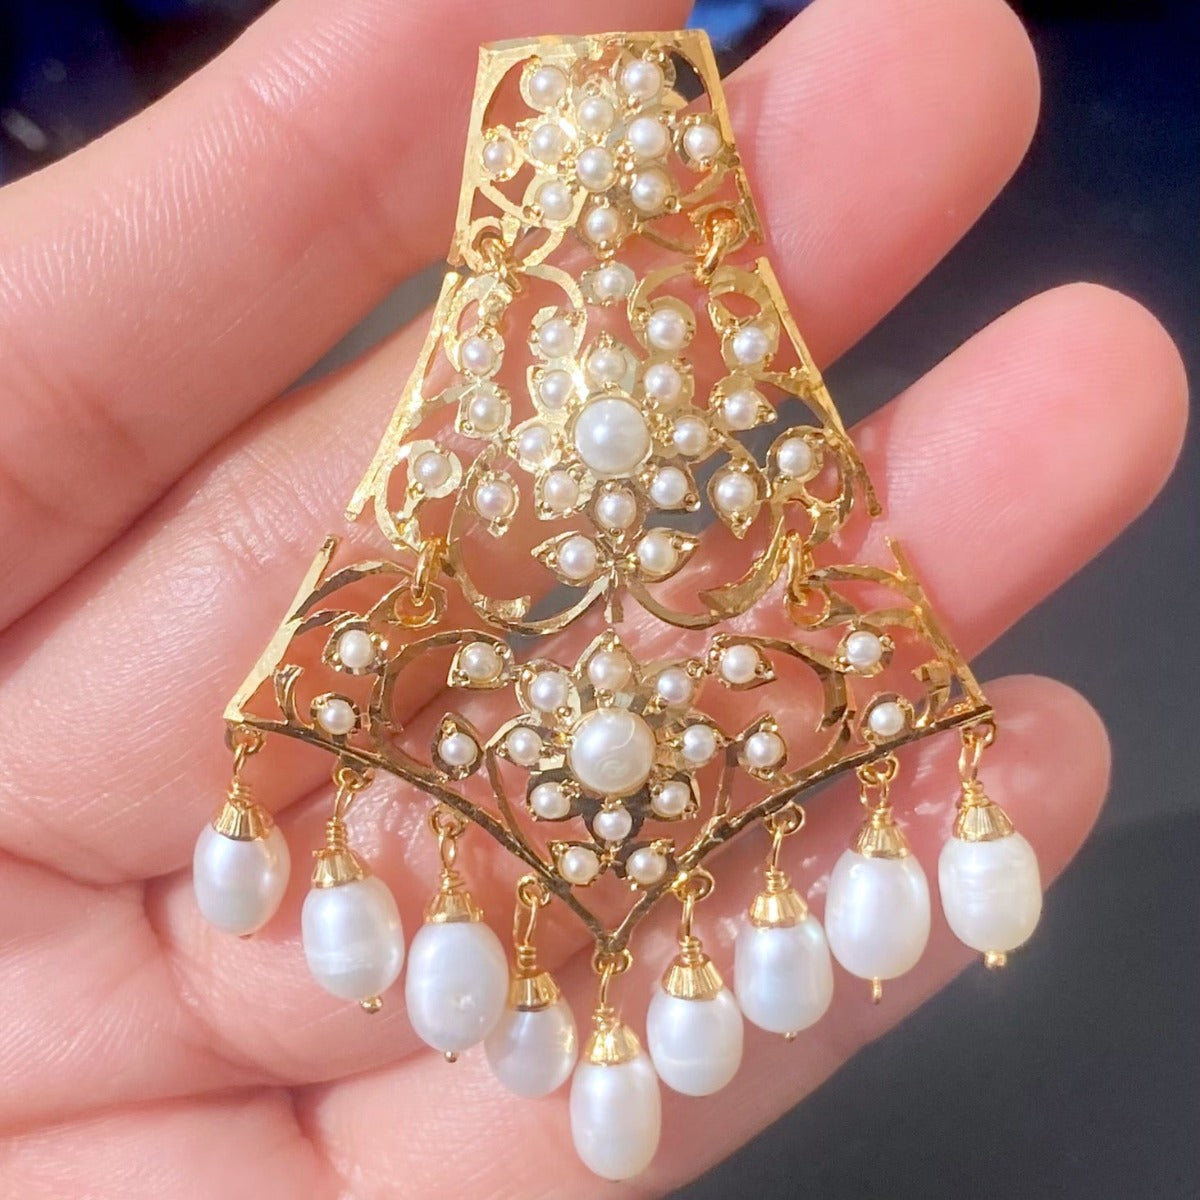 antique pearl earrings